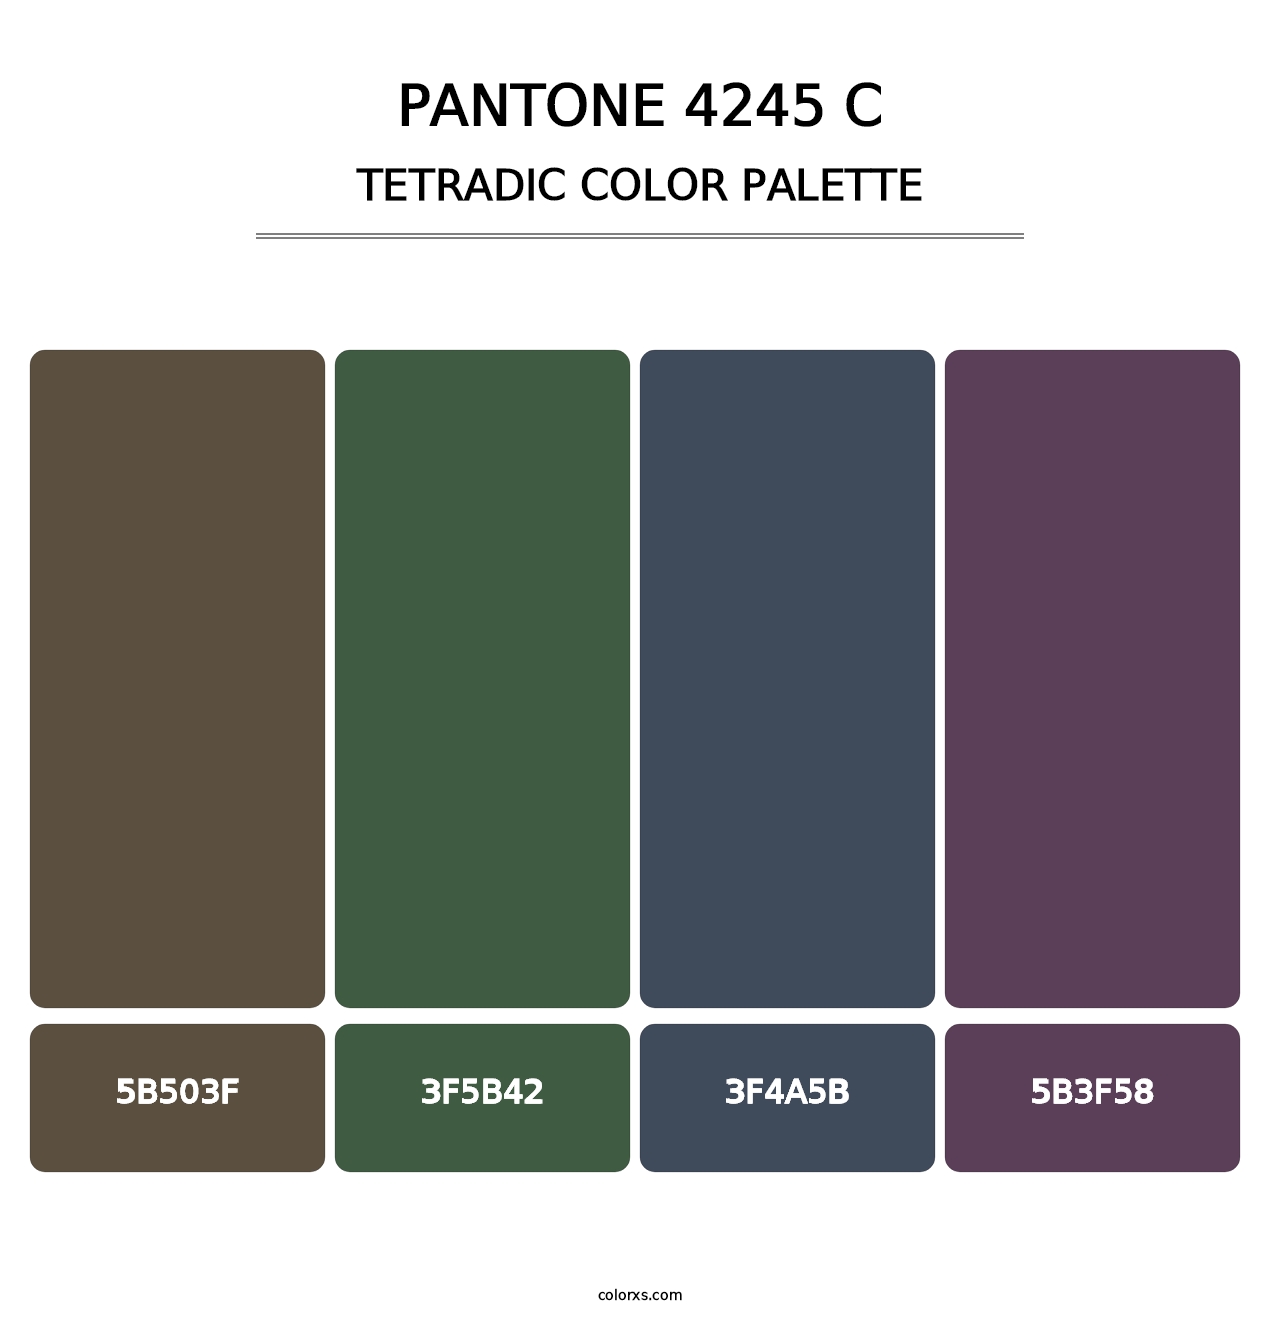 PANTONE 4245 C - Tetradic Color Palette